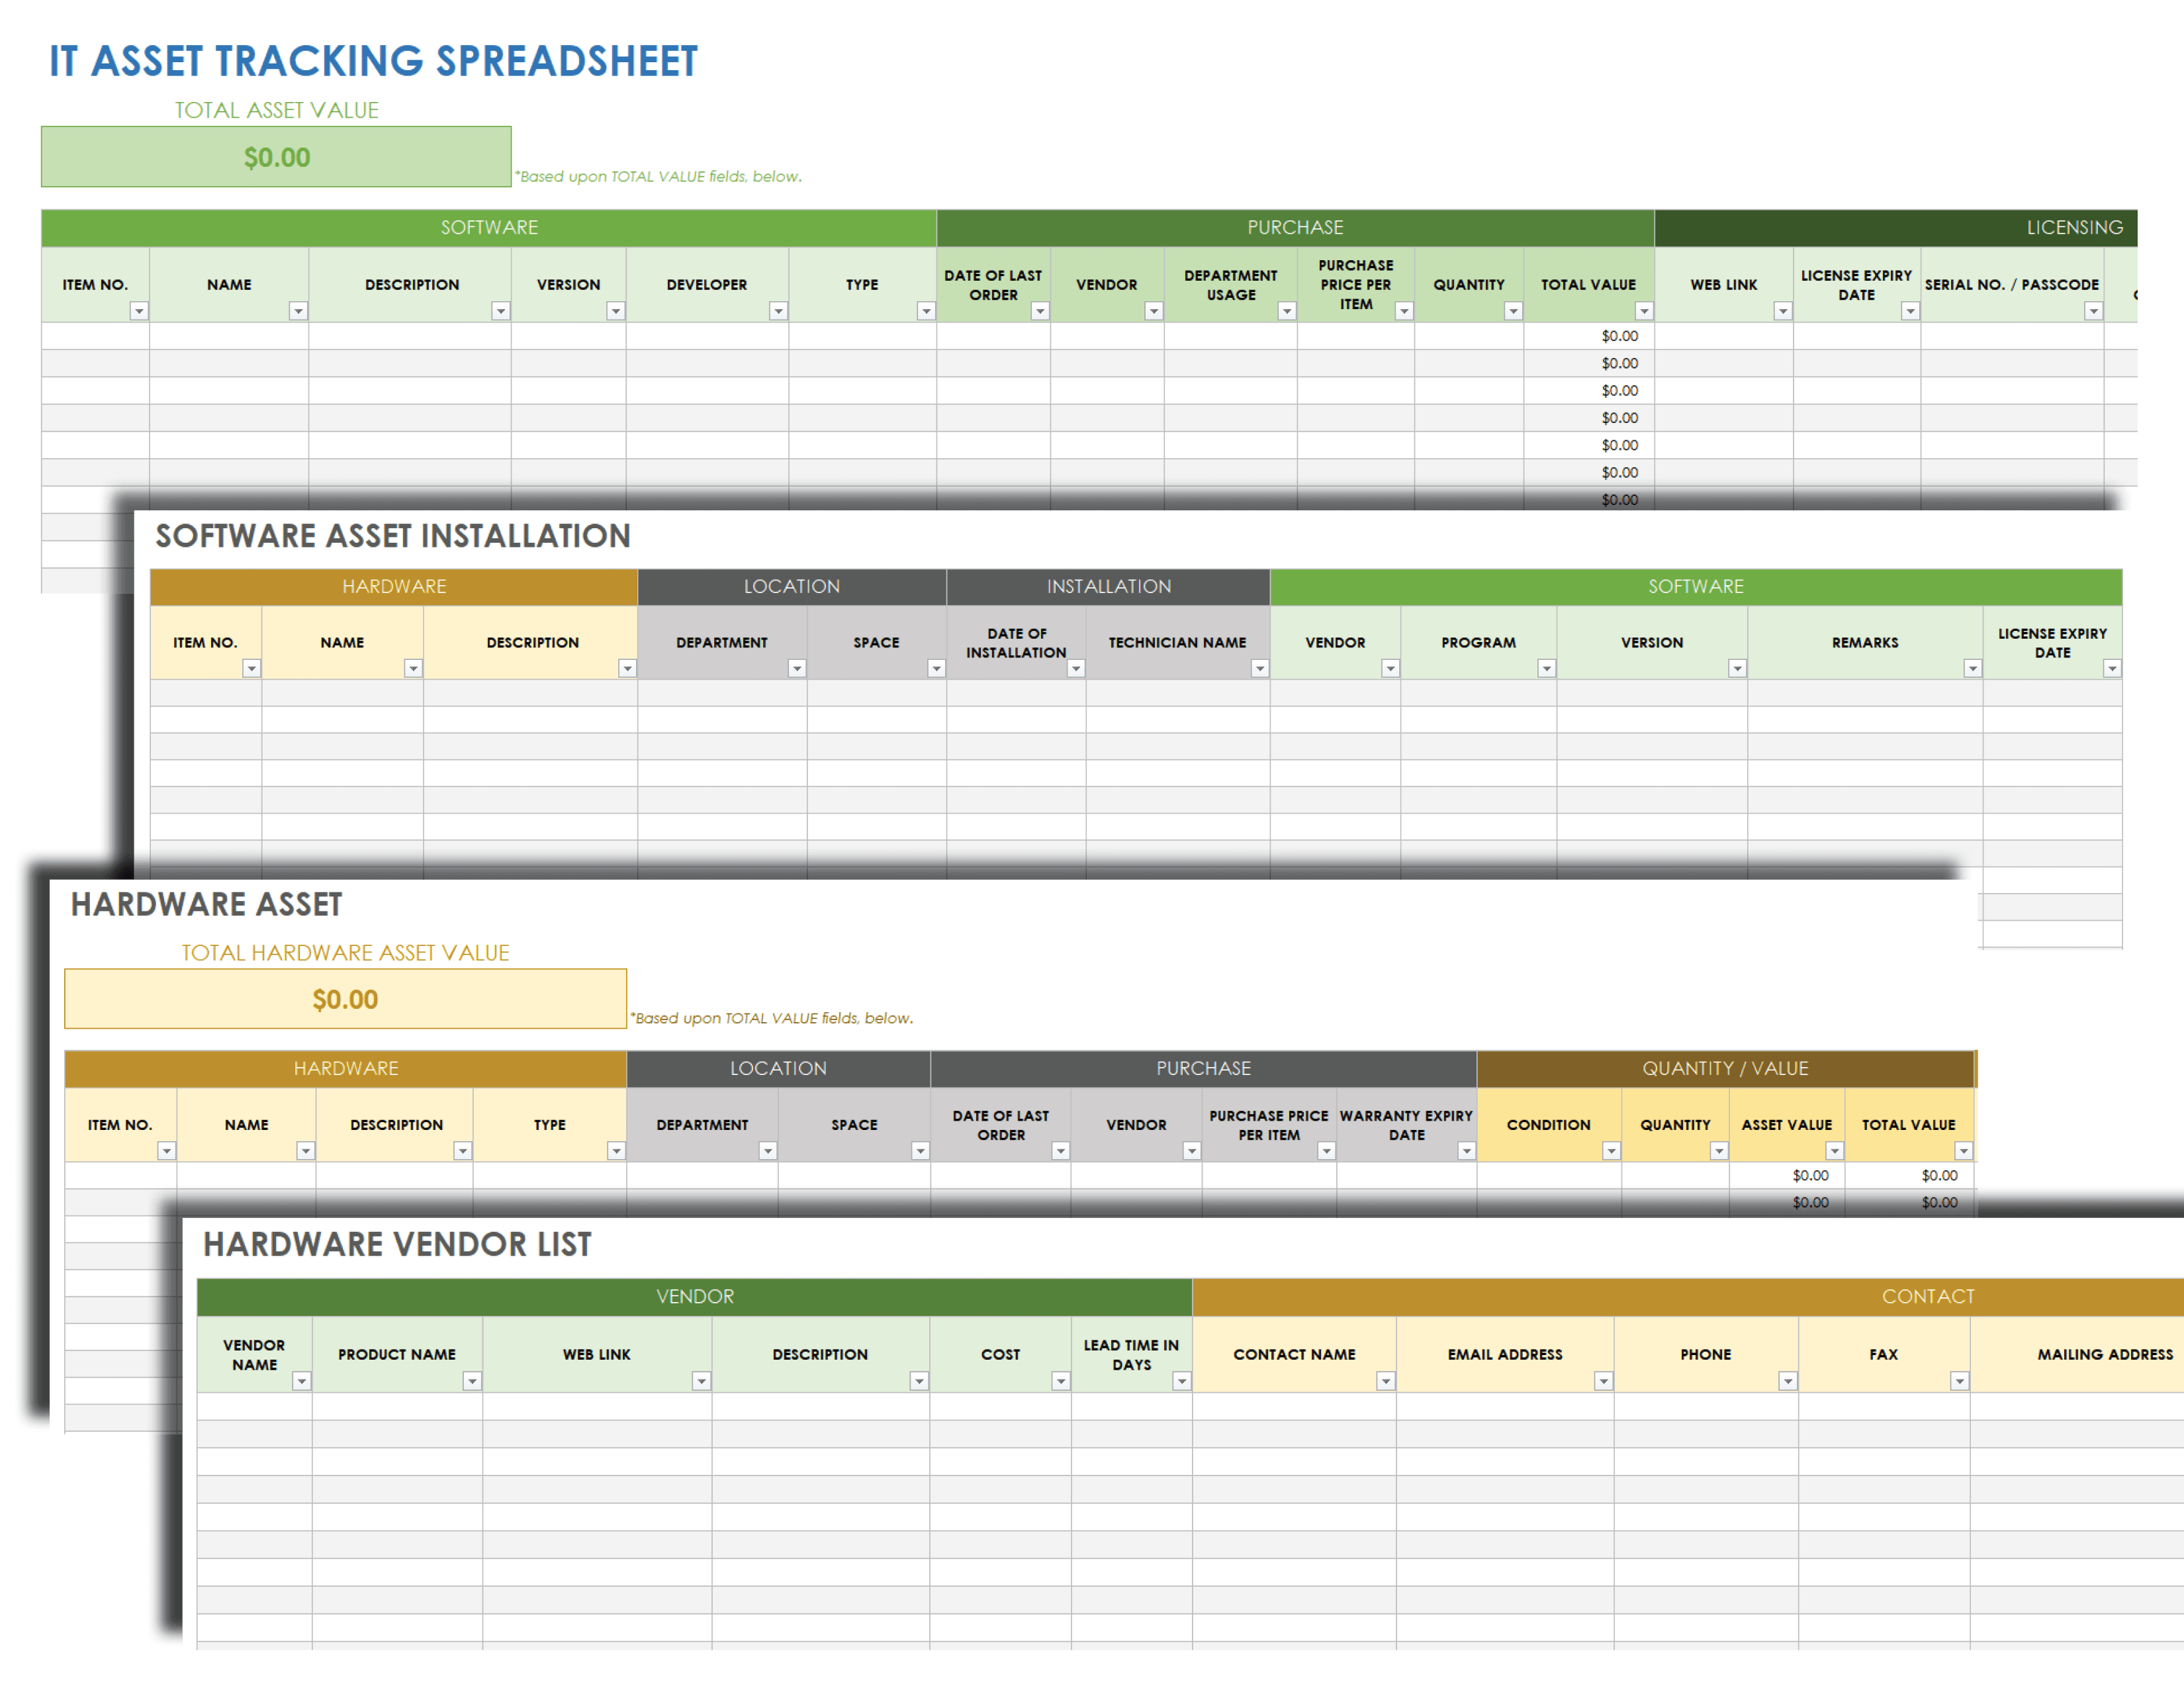 IT Asset Tracking Spreadsheet